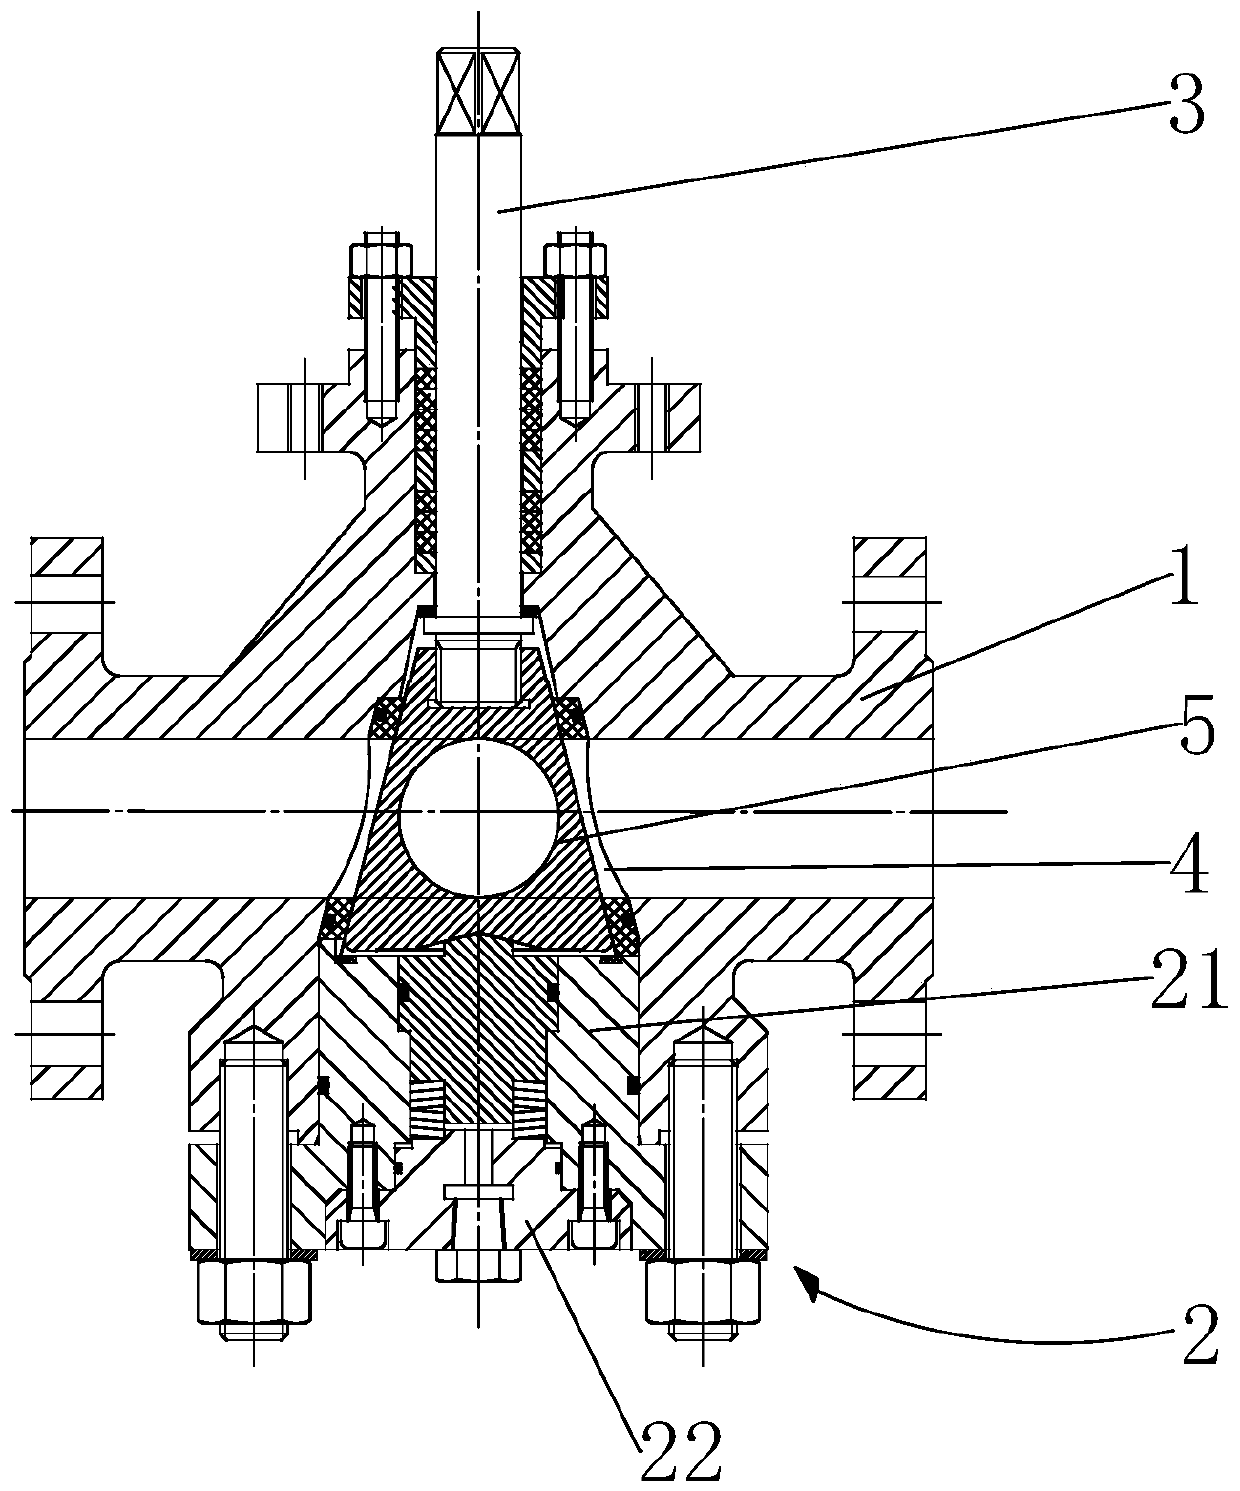 Cock regulating valve with high adjustable ratio